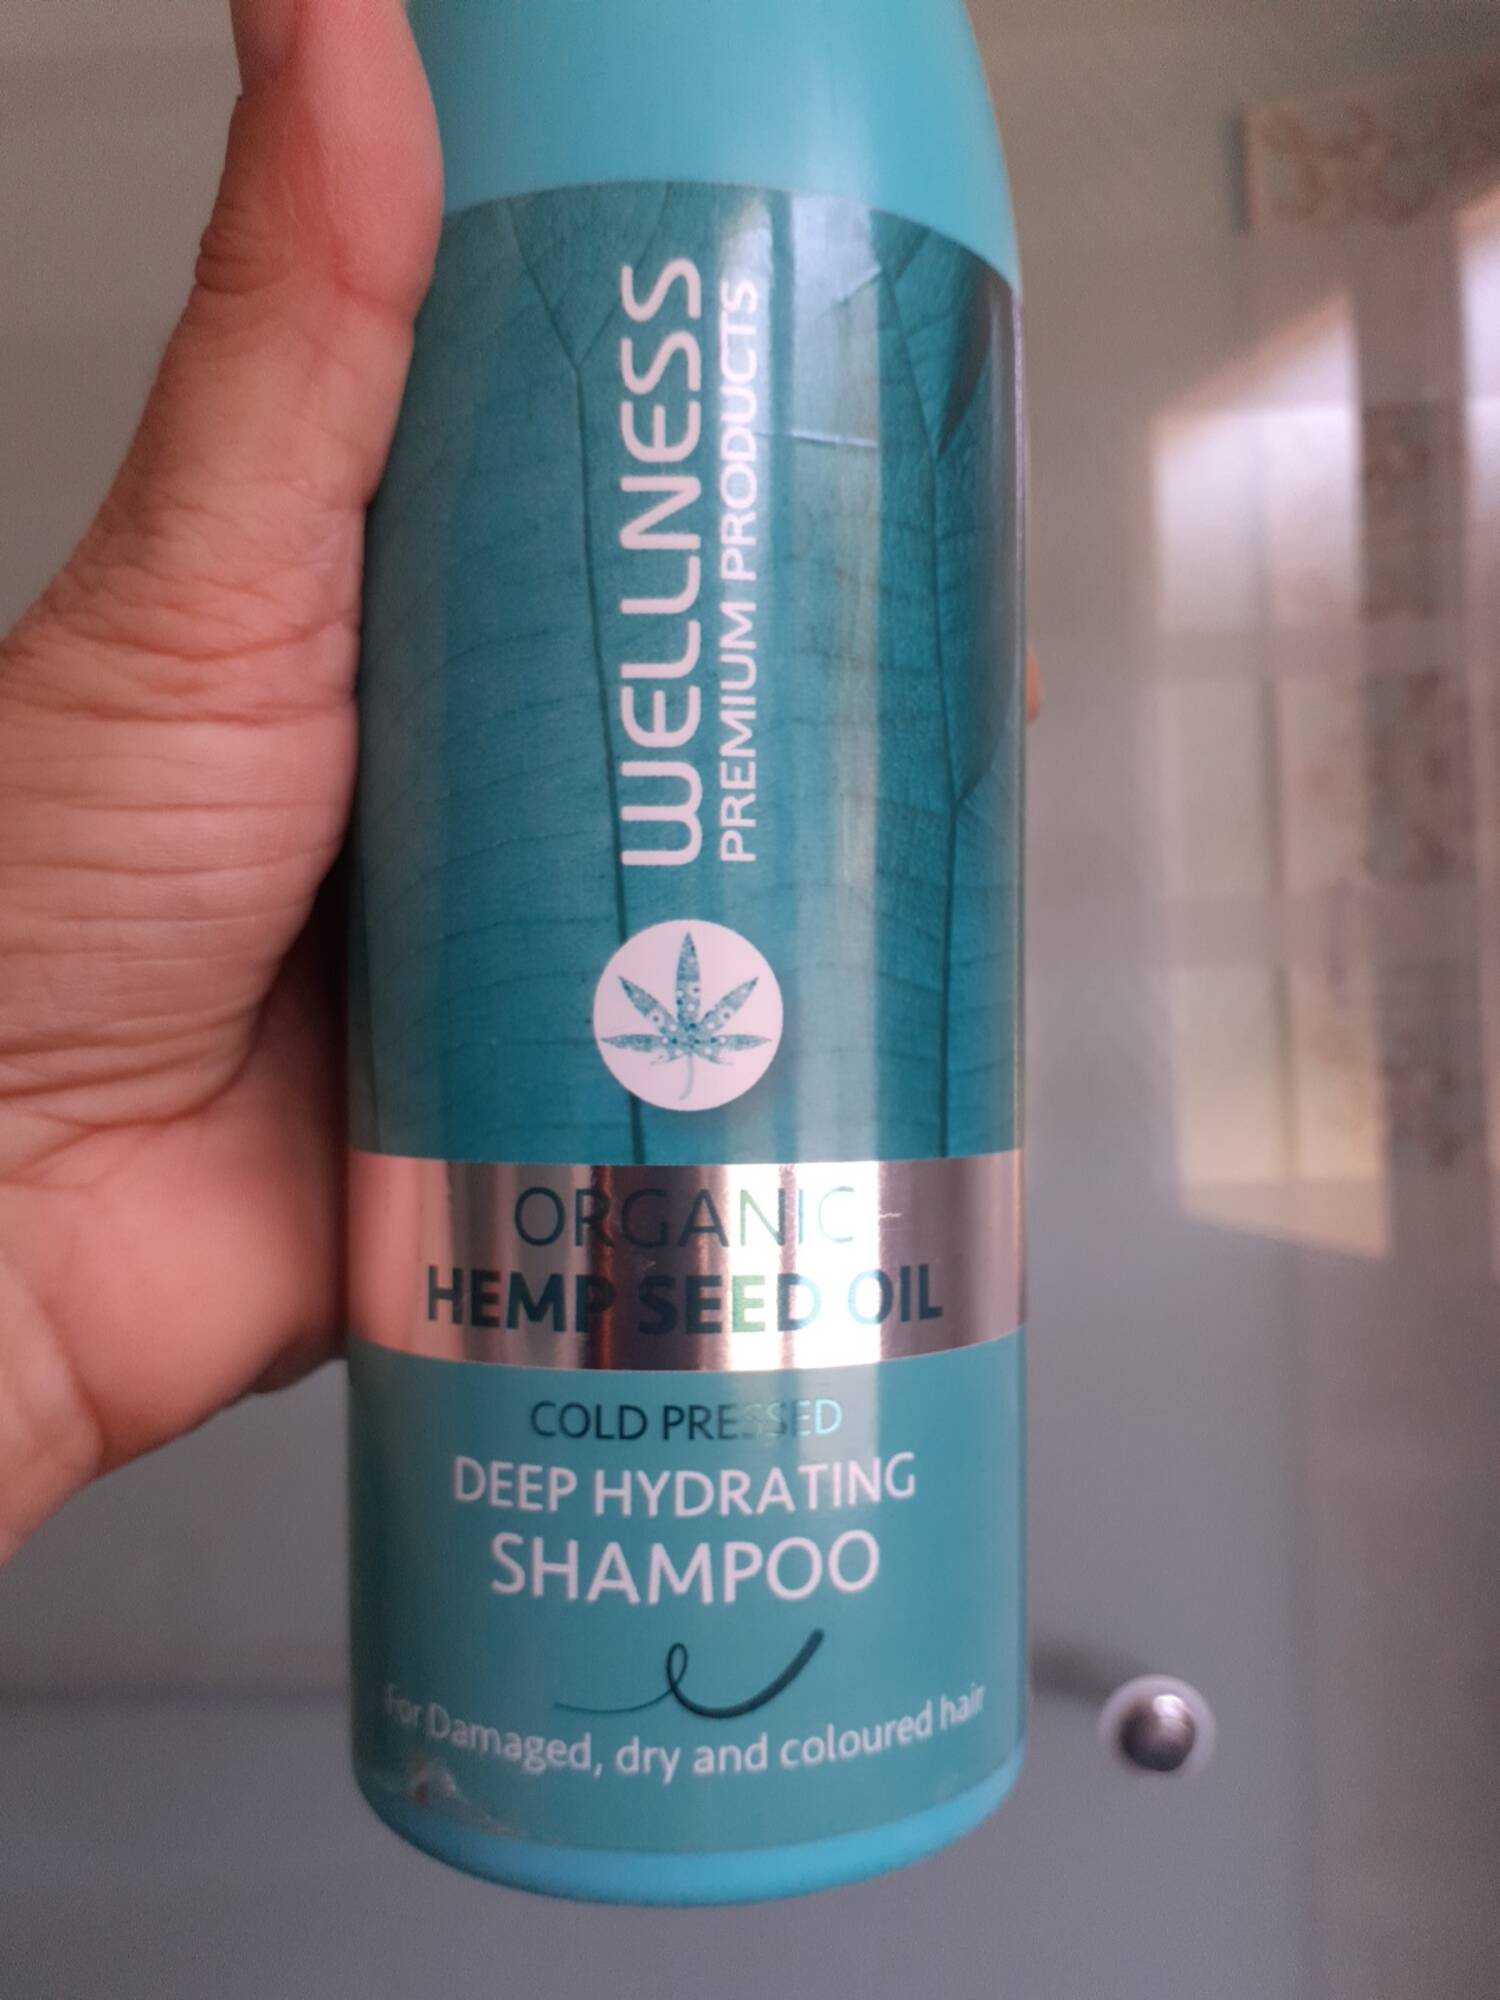 WELLNESS - Organic hemp seed oil - Deep hydrating shampoo